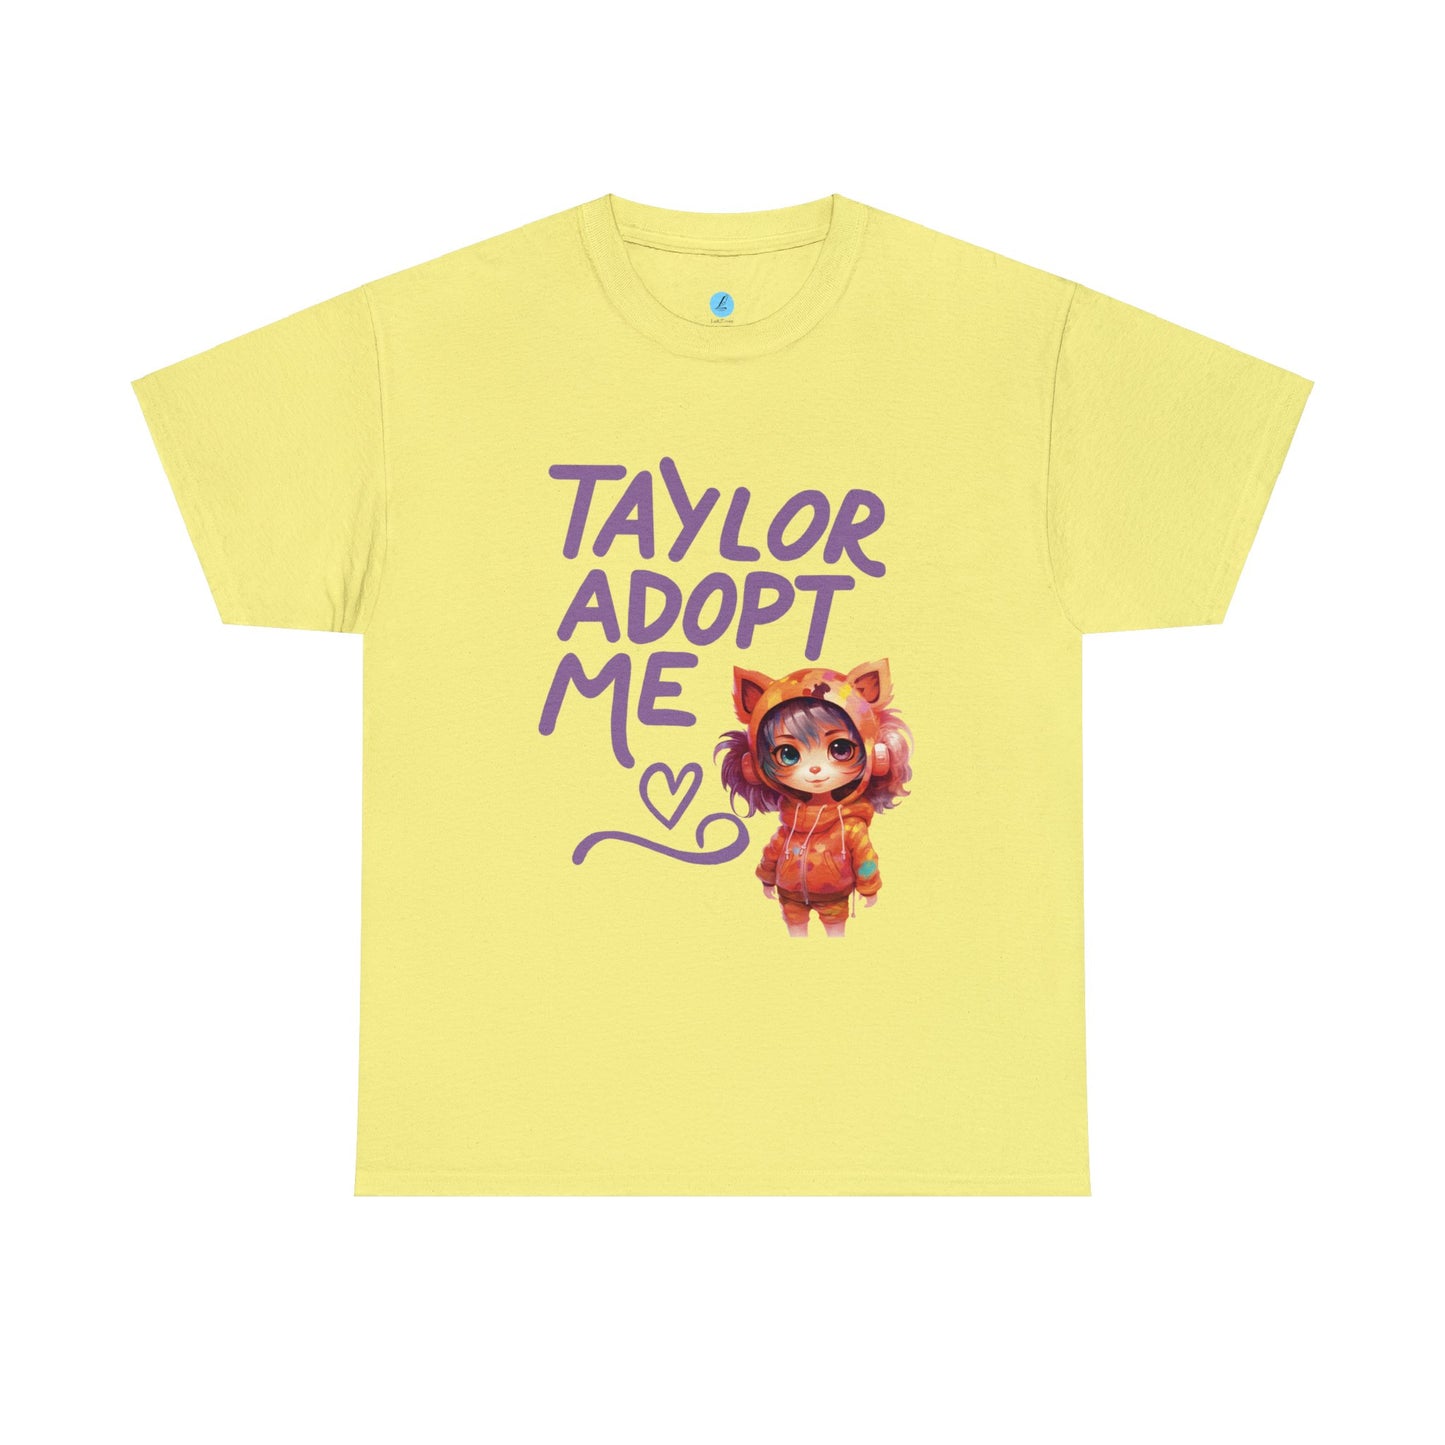 Taylor, Adopt Me! Cute Silly Funny, Cat Girl, Music Headphones, Kawaii.